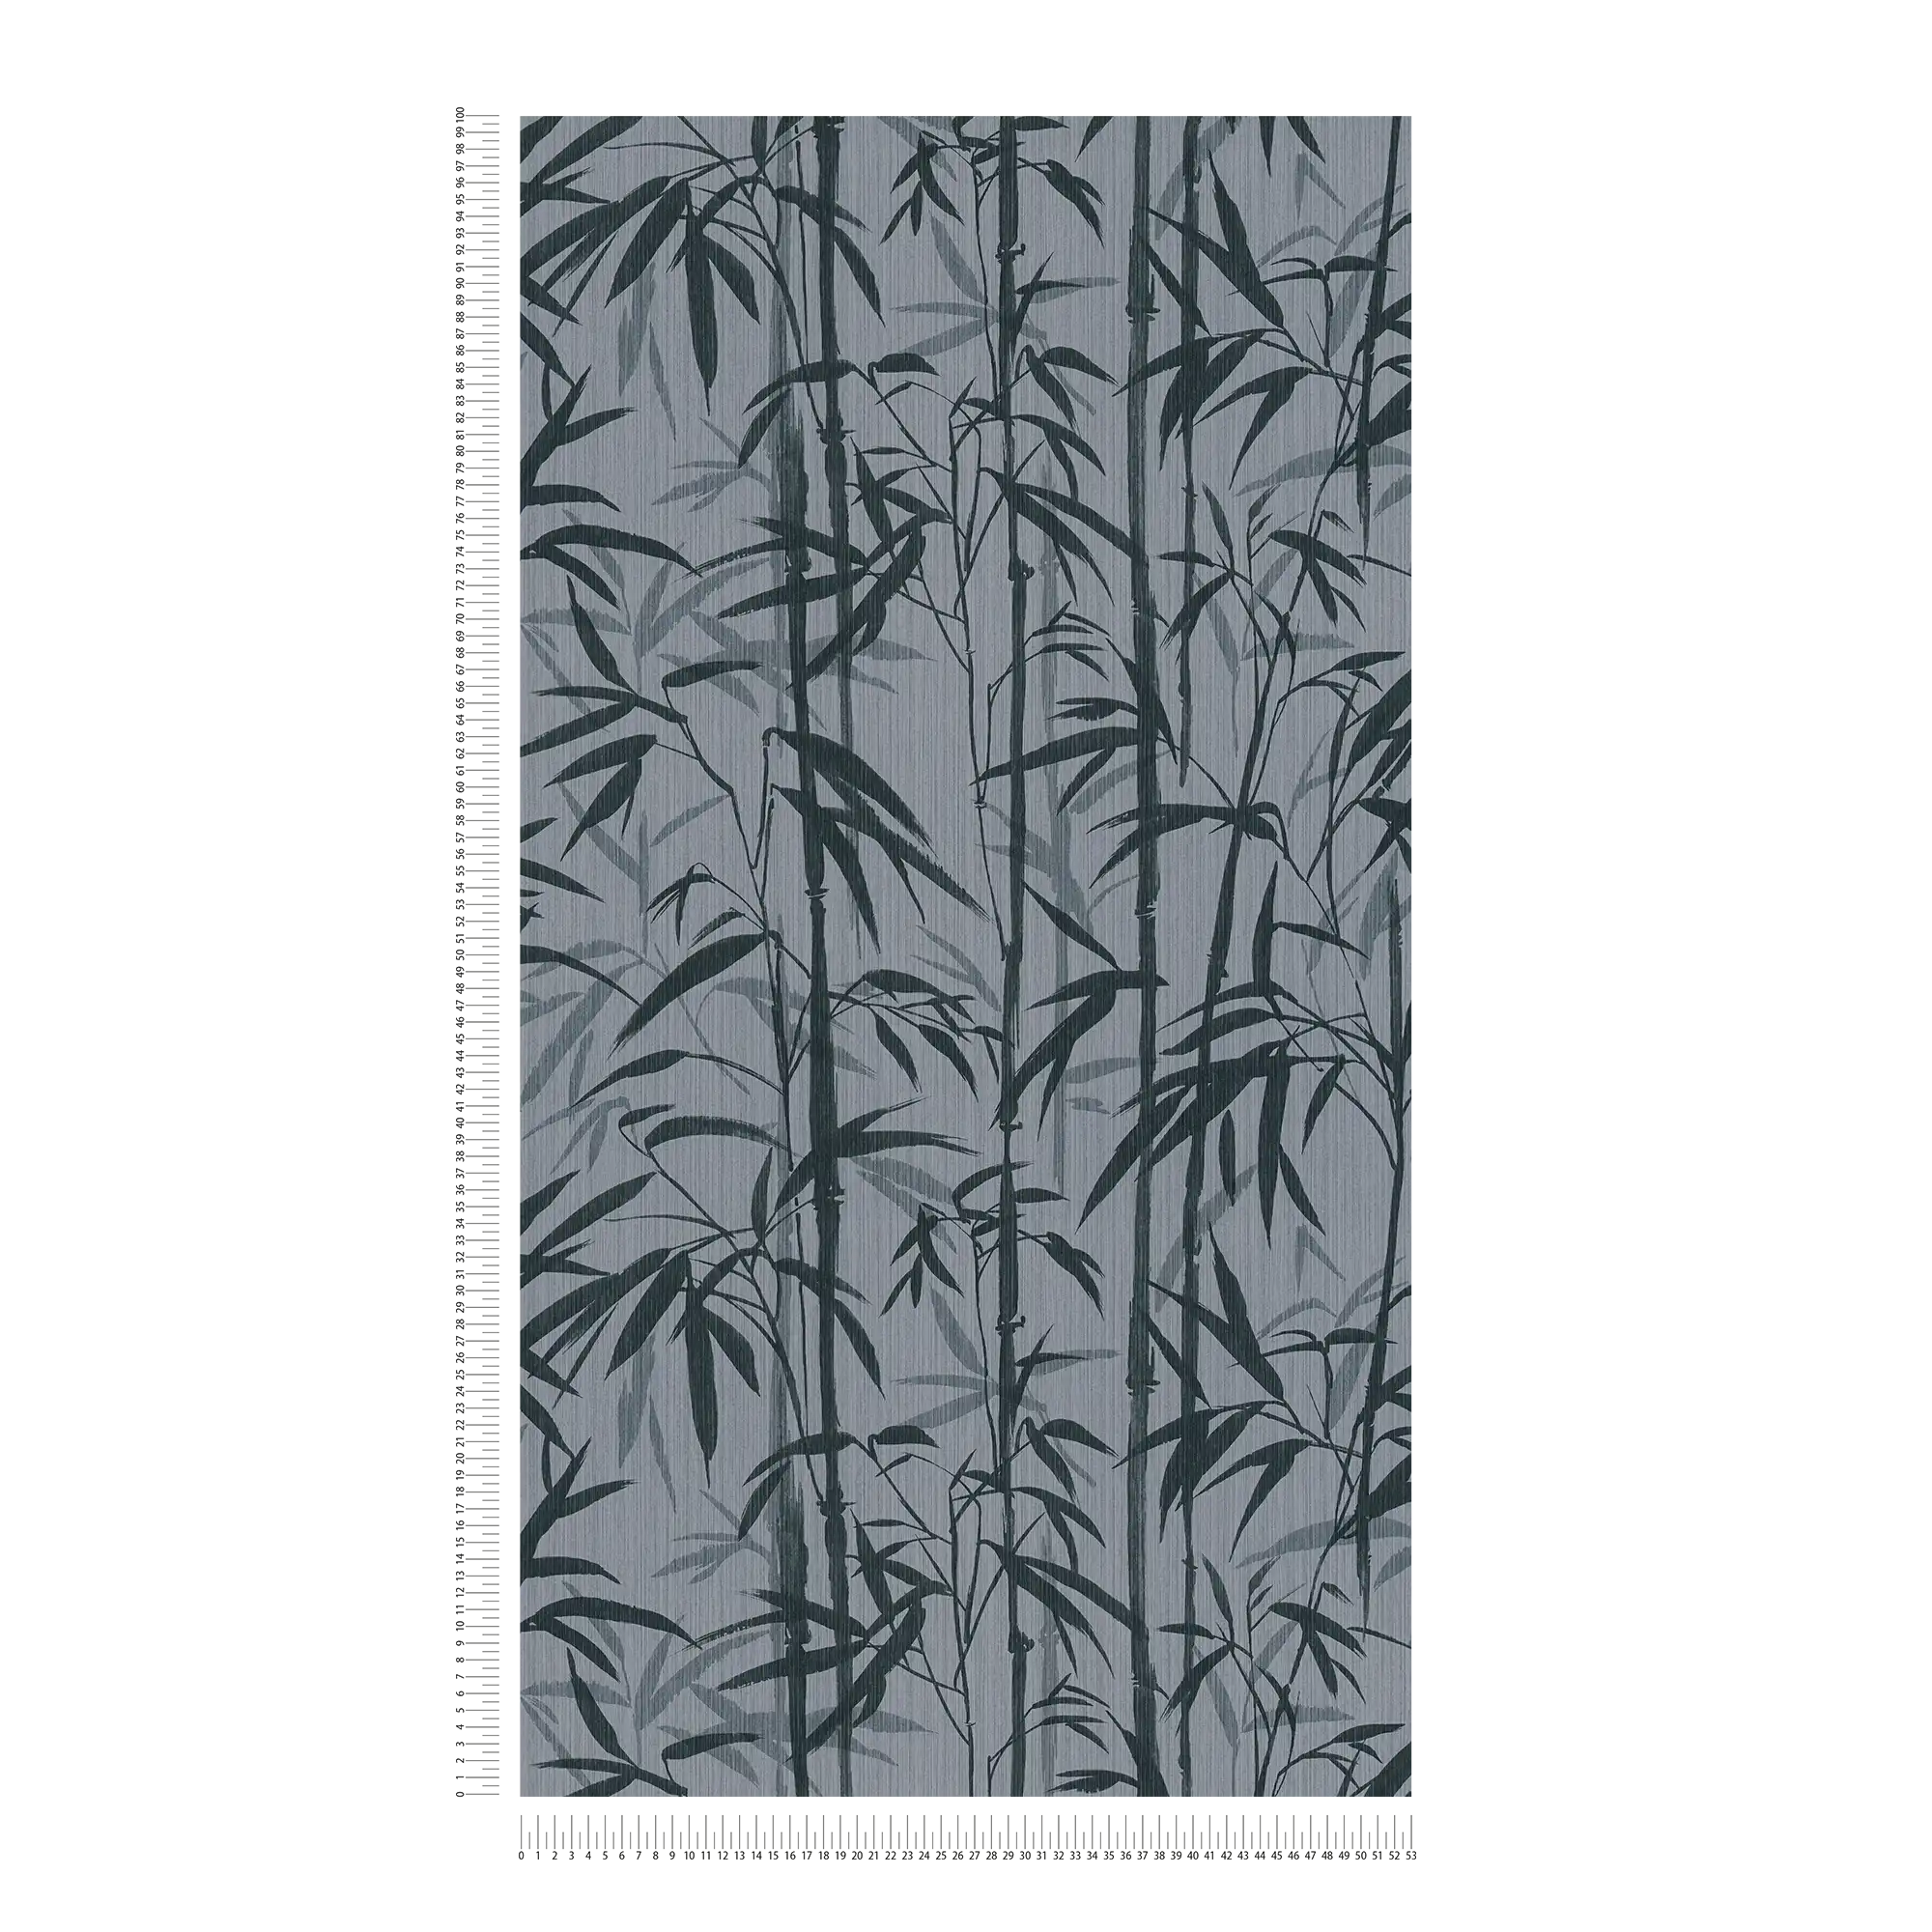             MICHALSKY non-woven wallpaper natural bamboo pattern - grey, black
        